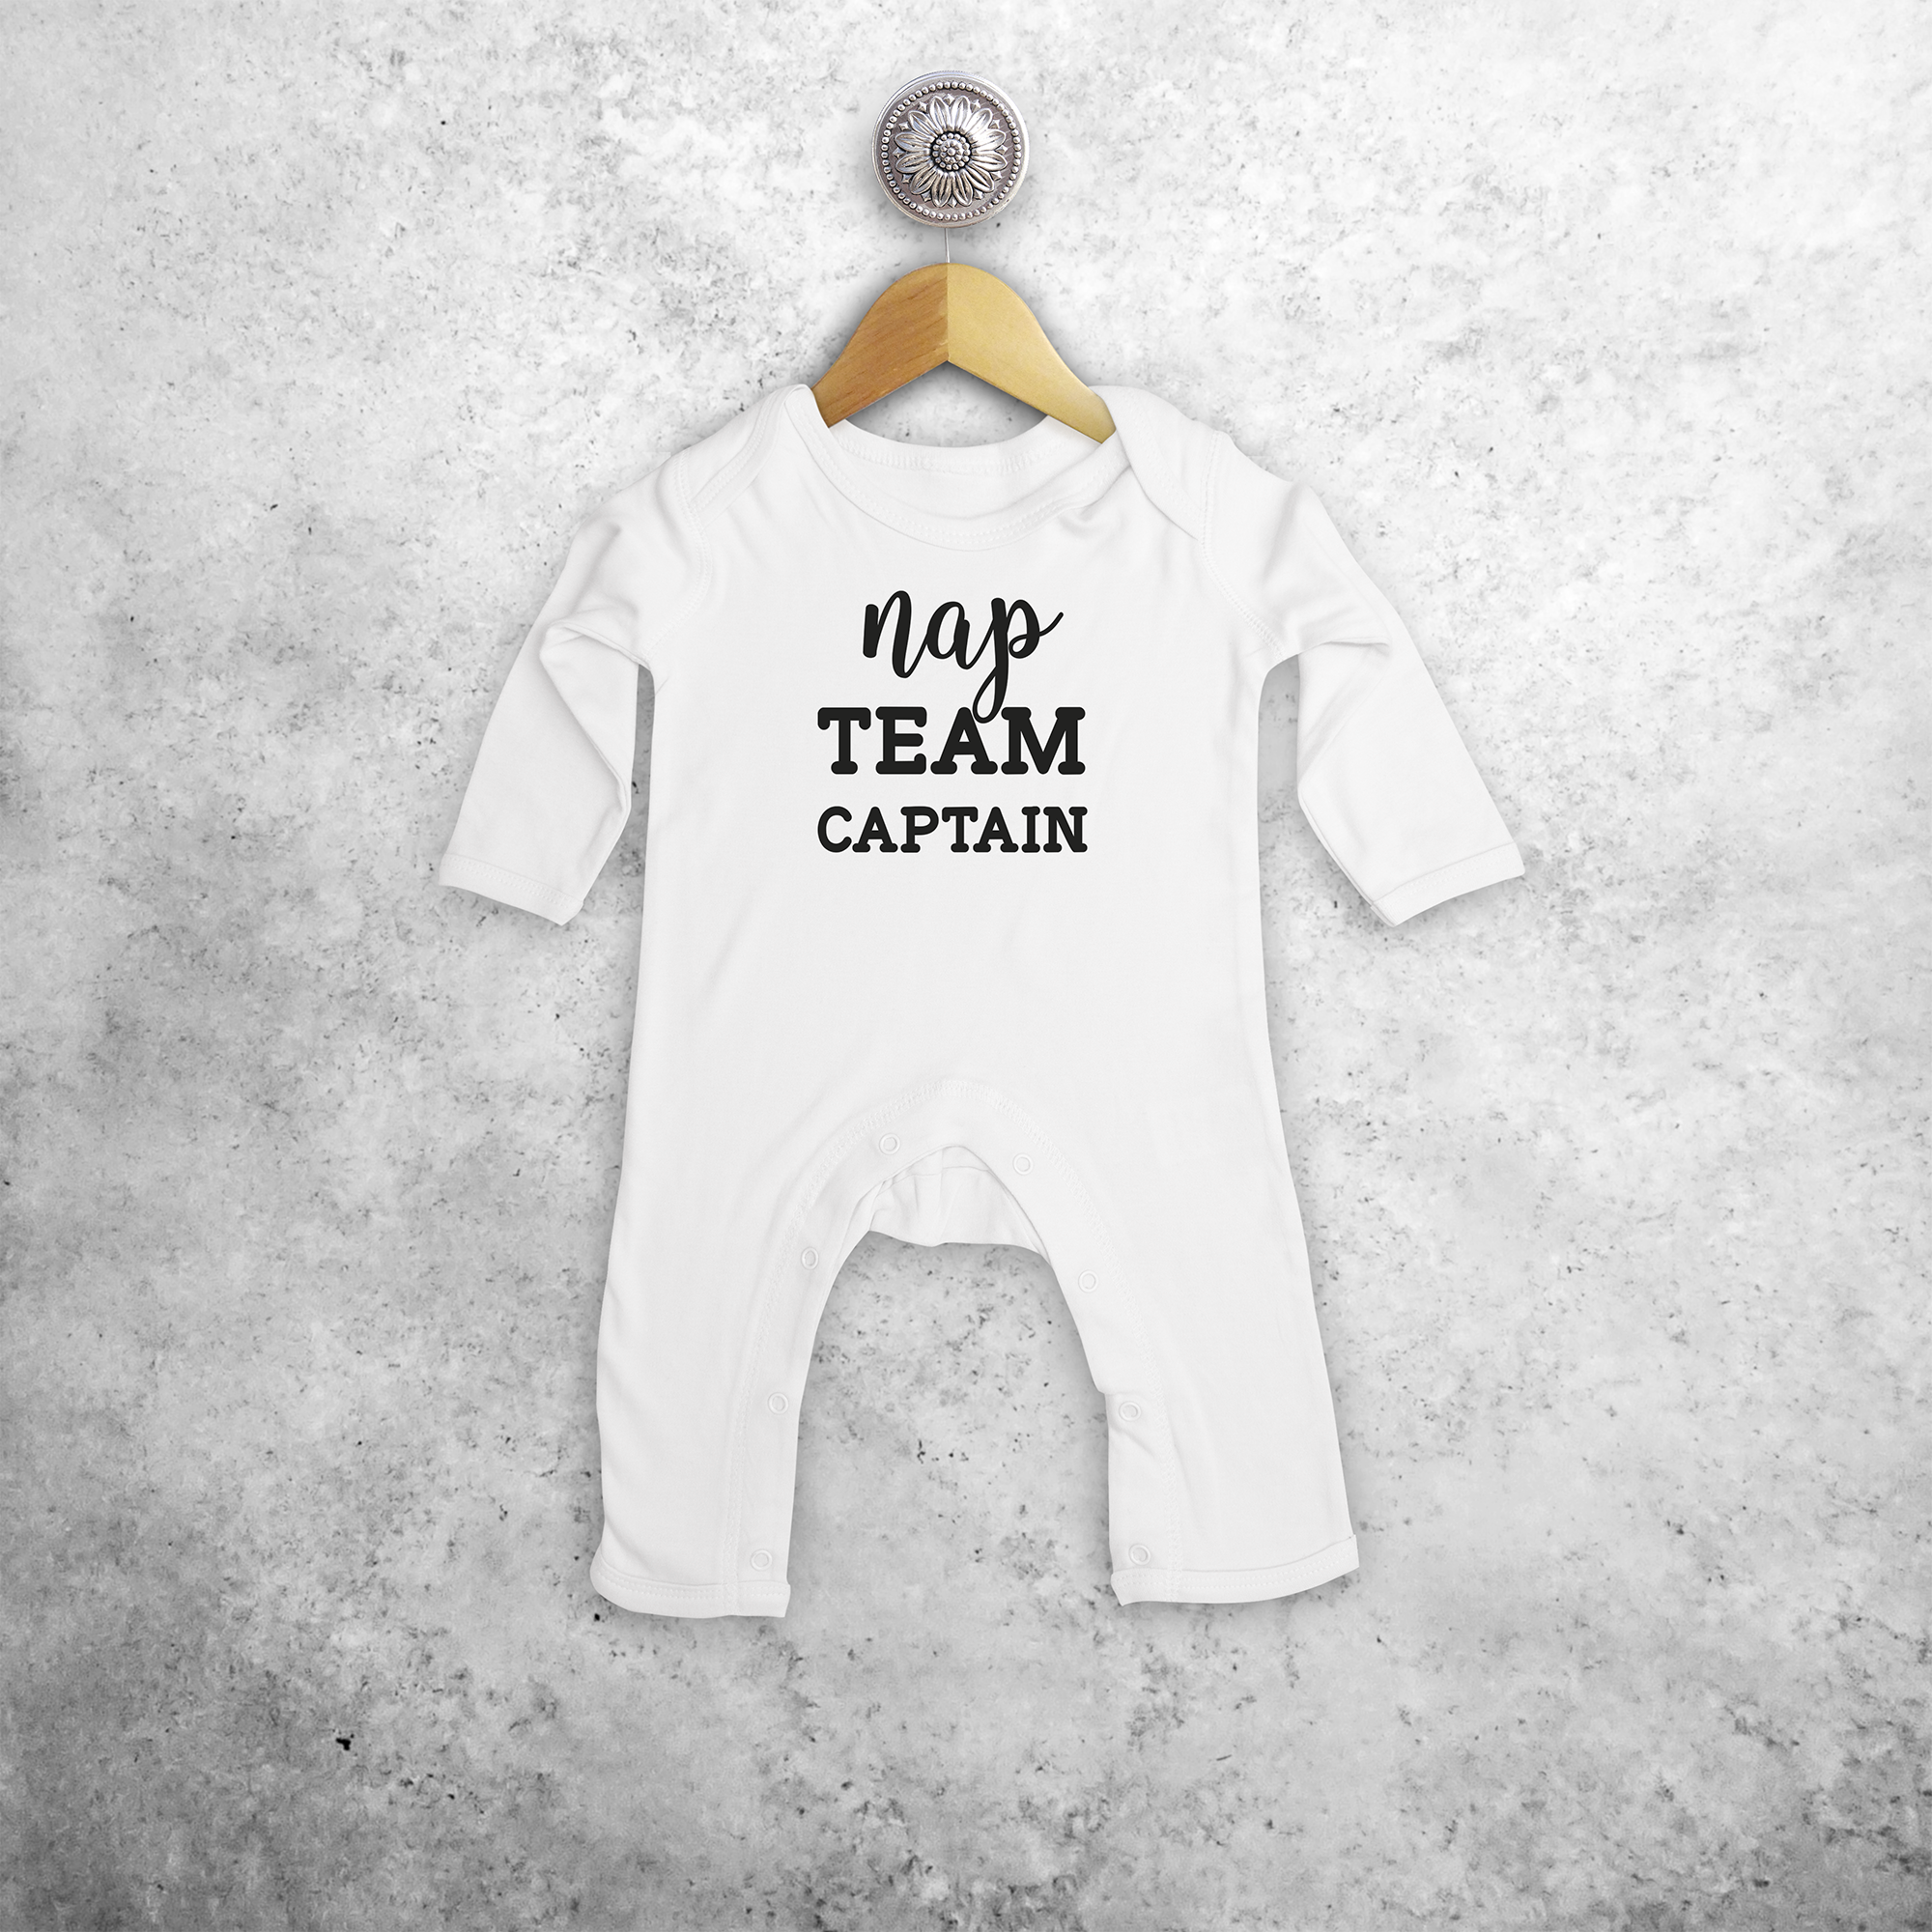 'Nap team captain' baby romper